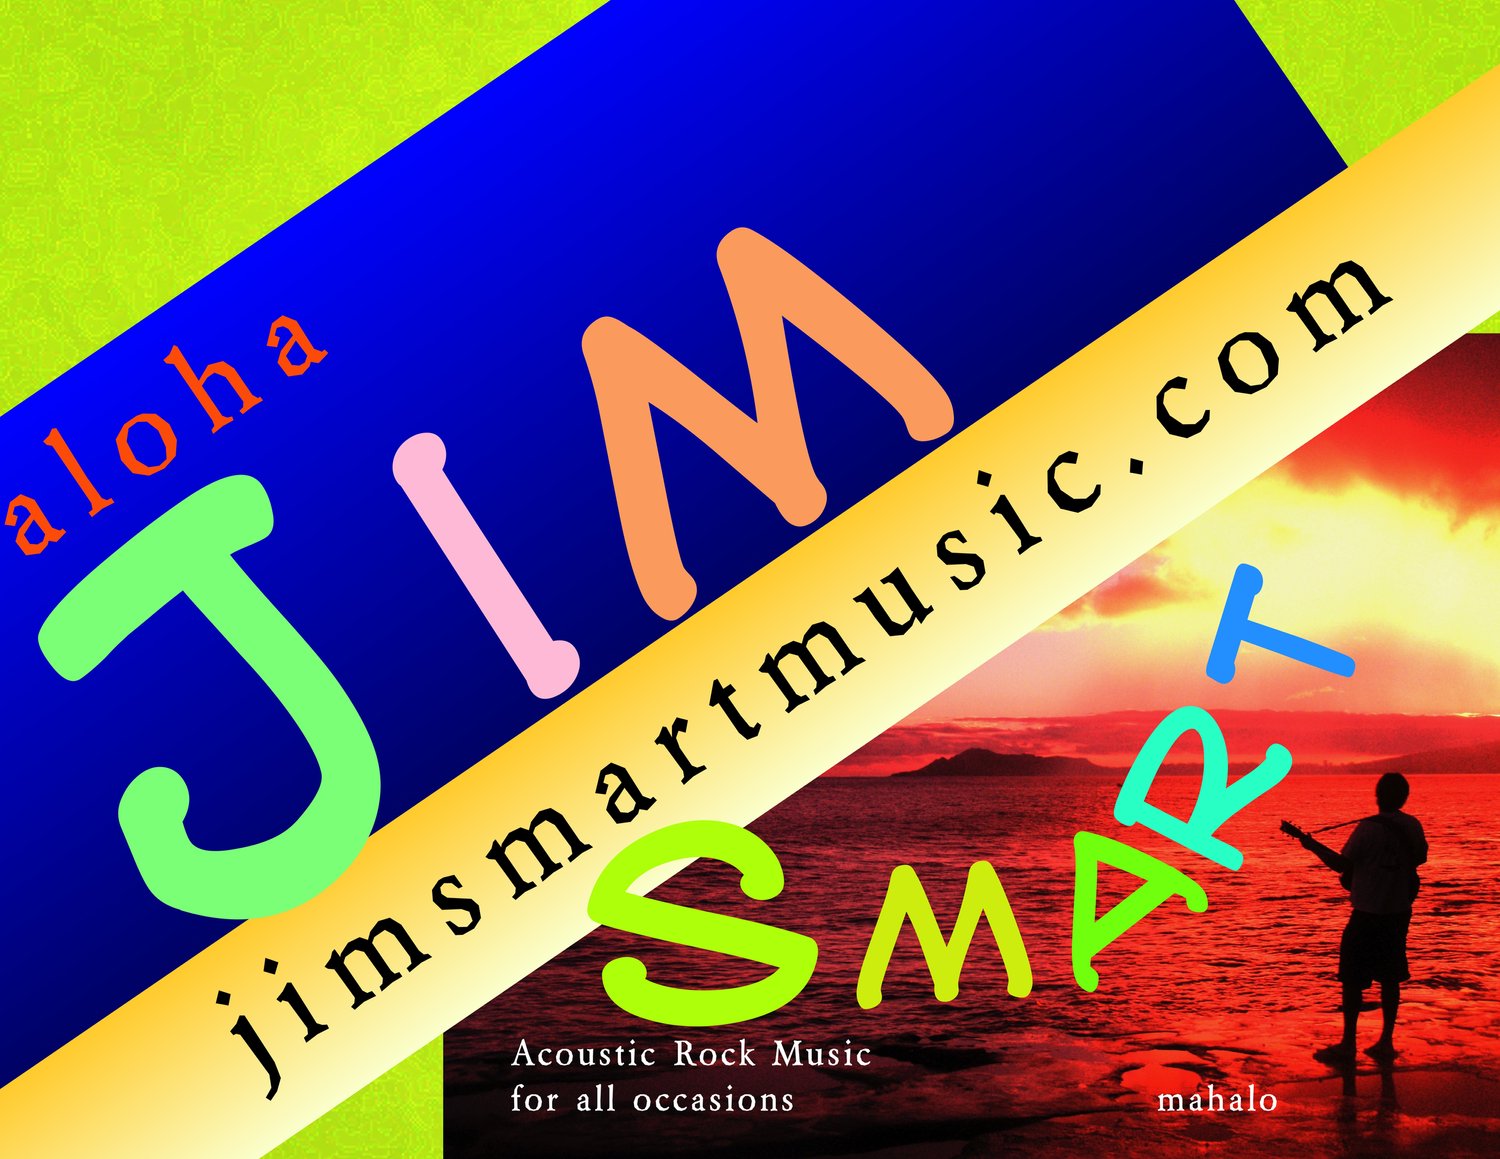 Jim Smart Music